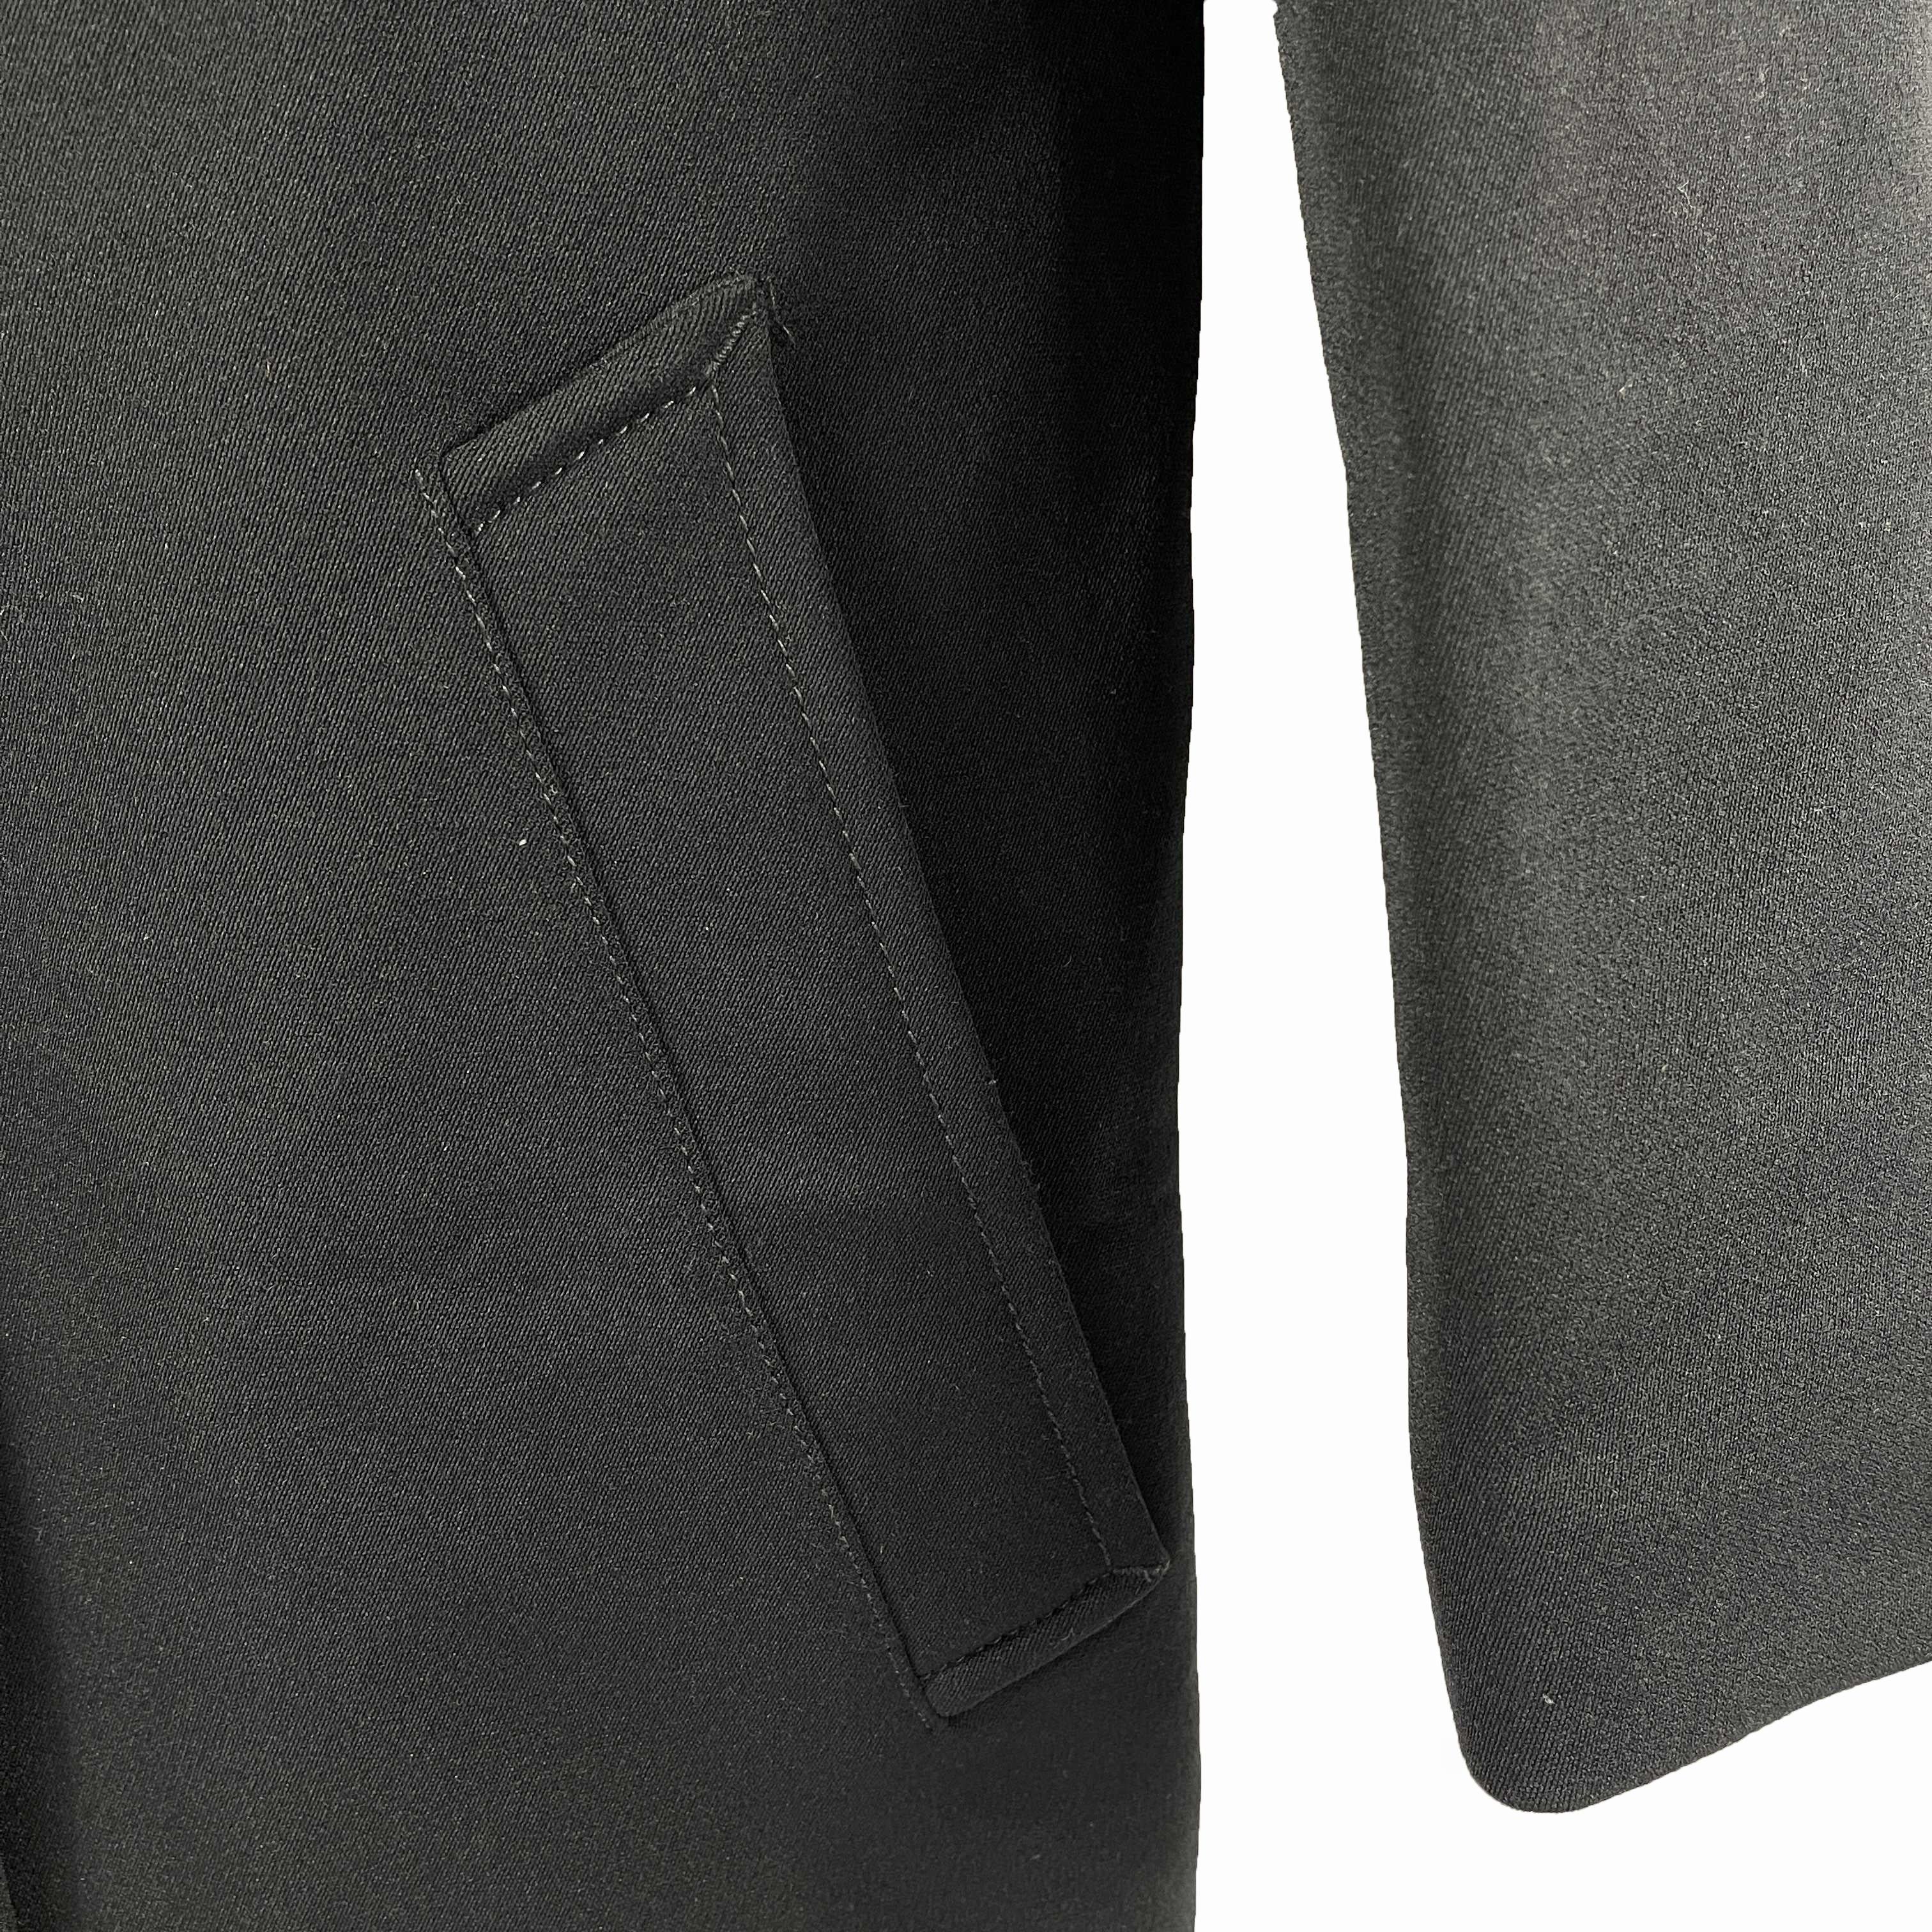 Prada Nylon Double Pocket Long Overcoat Jacket Black 38 US 2 5